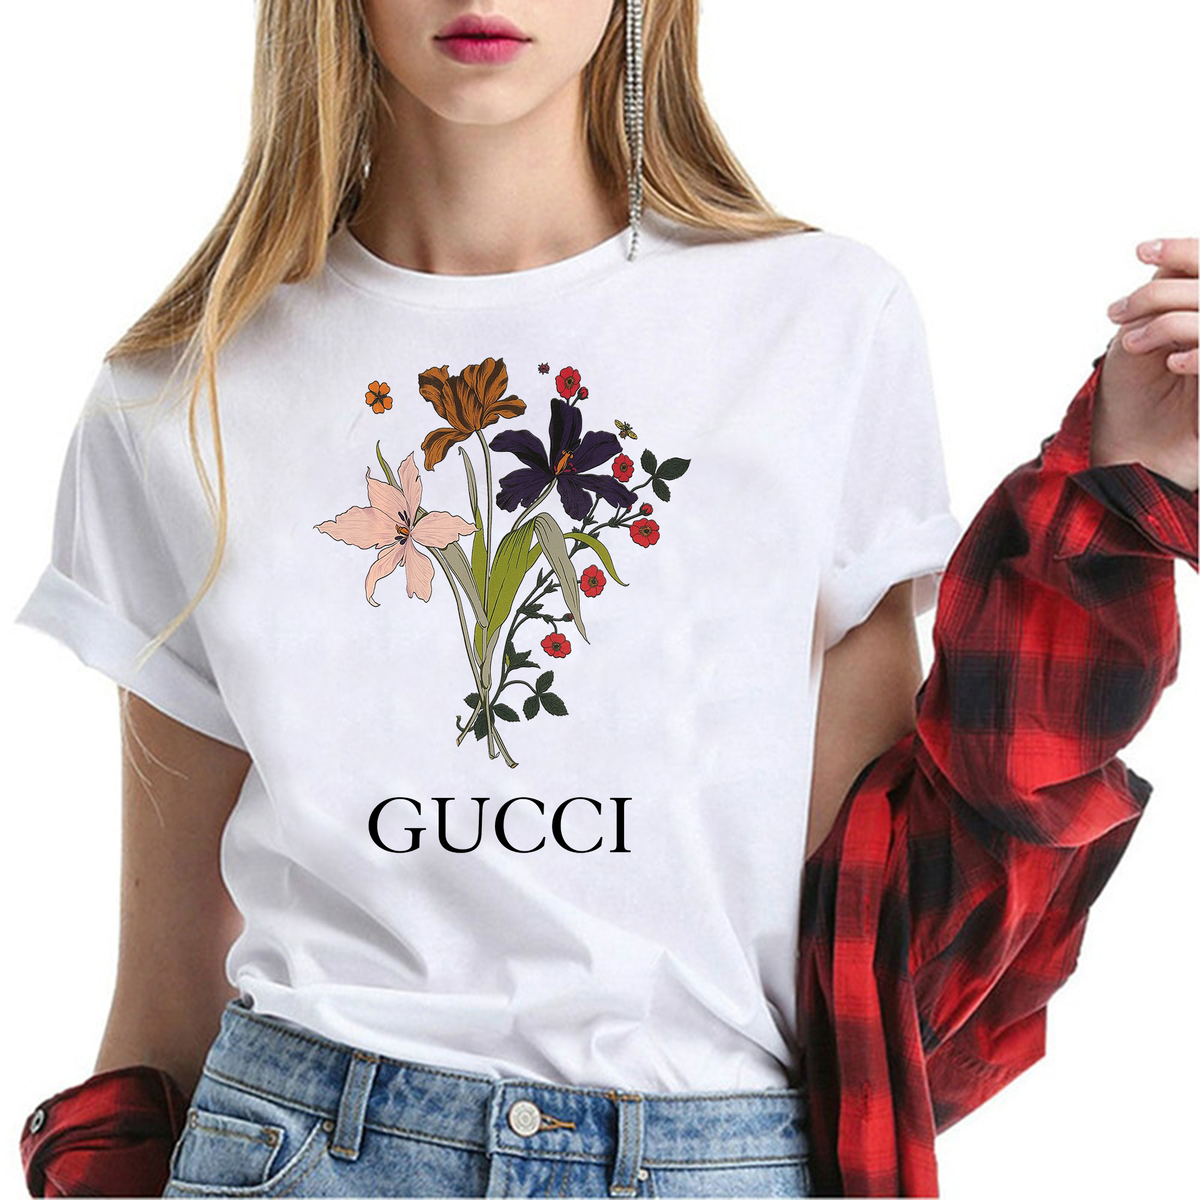 gucci t shirt flowers